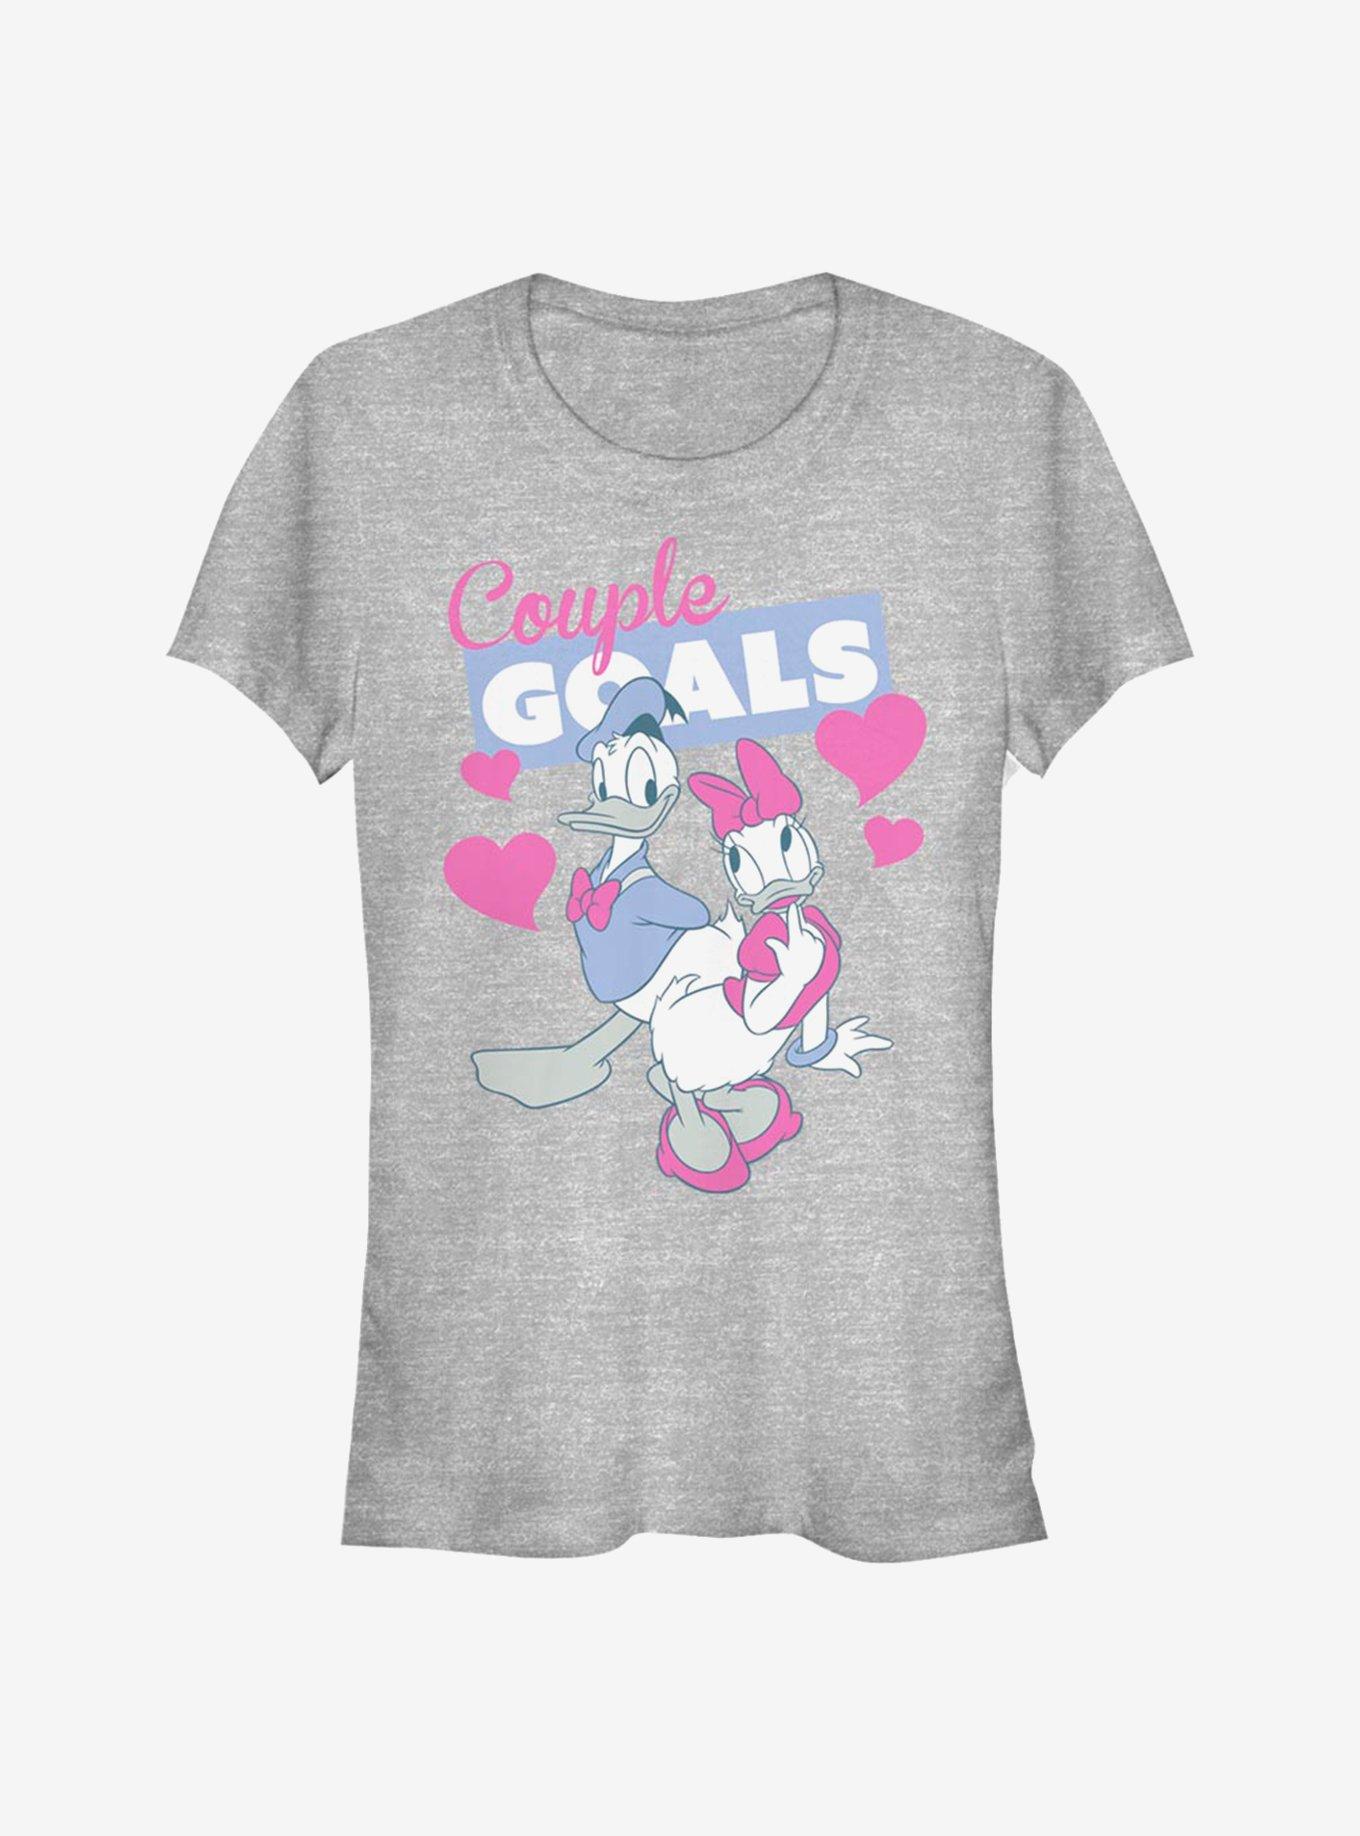 Disney Donald Duck & Daisy Duck Couple Goals Girls T-Shirt, ATH HTR, hi-res